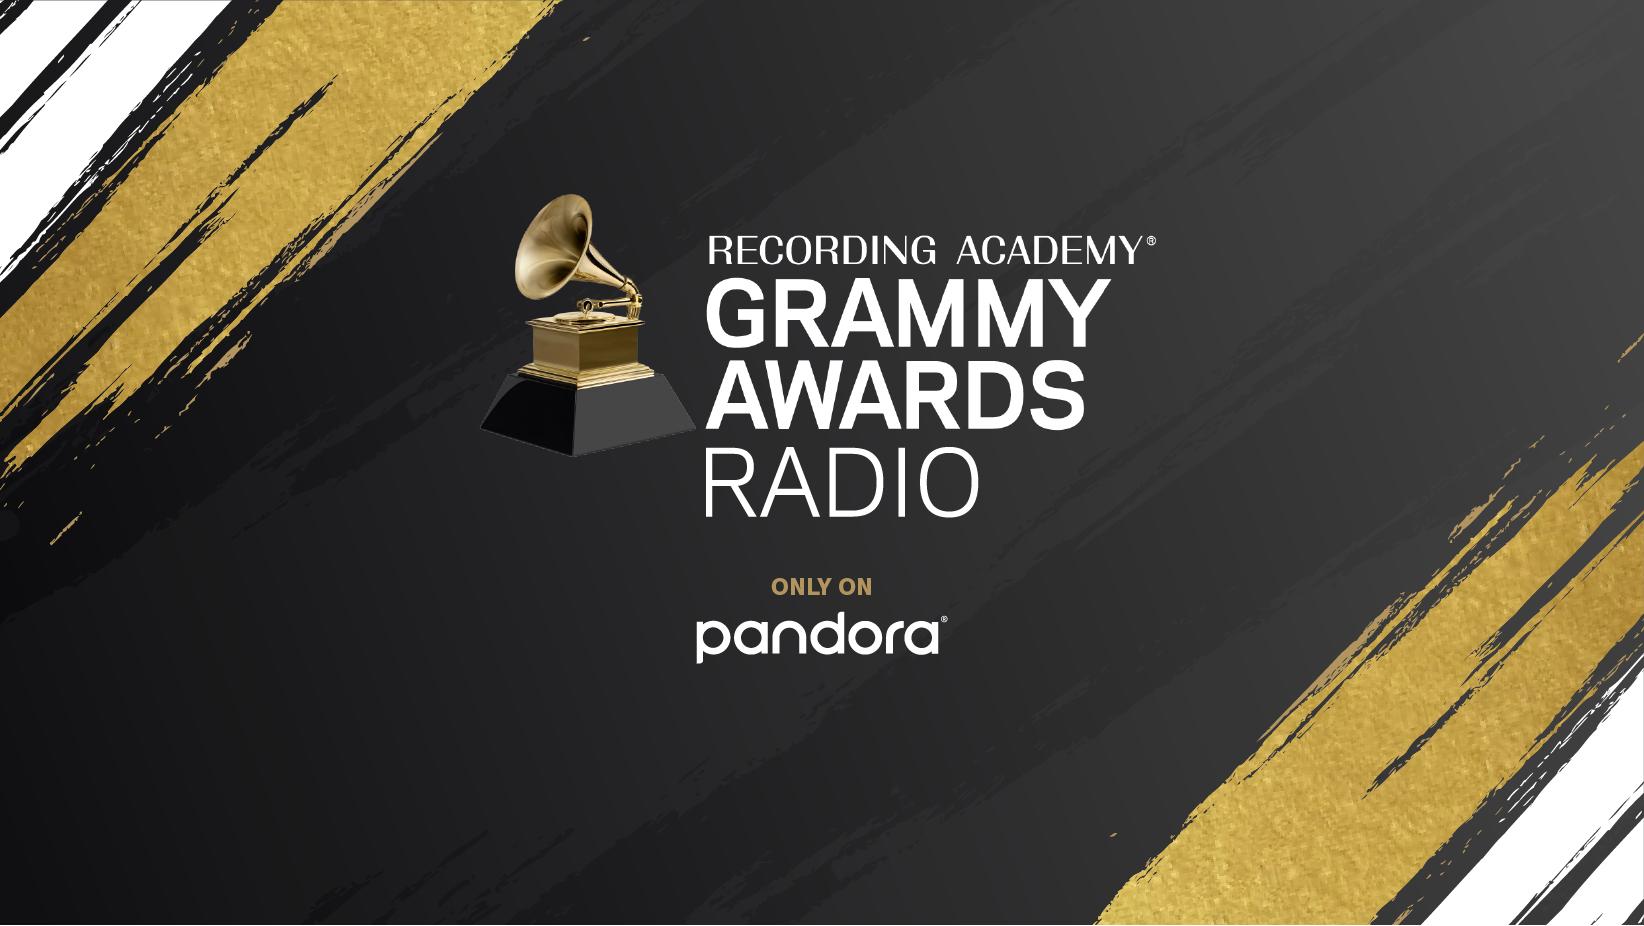 GRAMMY Awards Radio On Pandora 